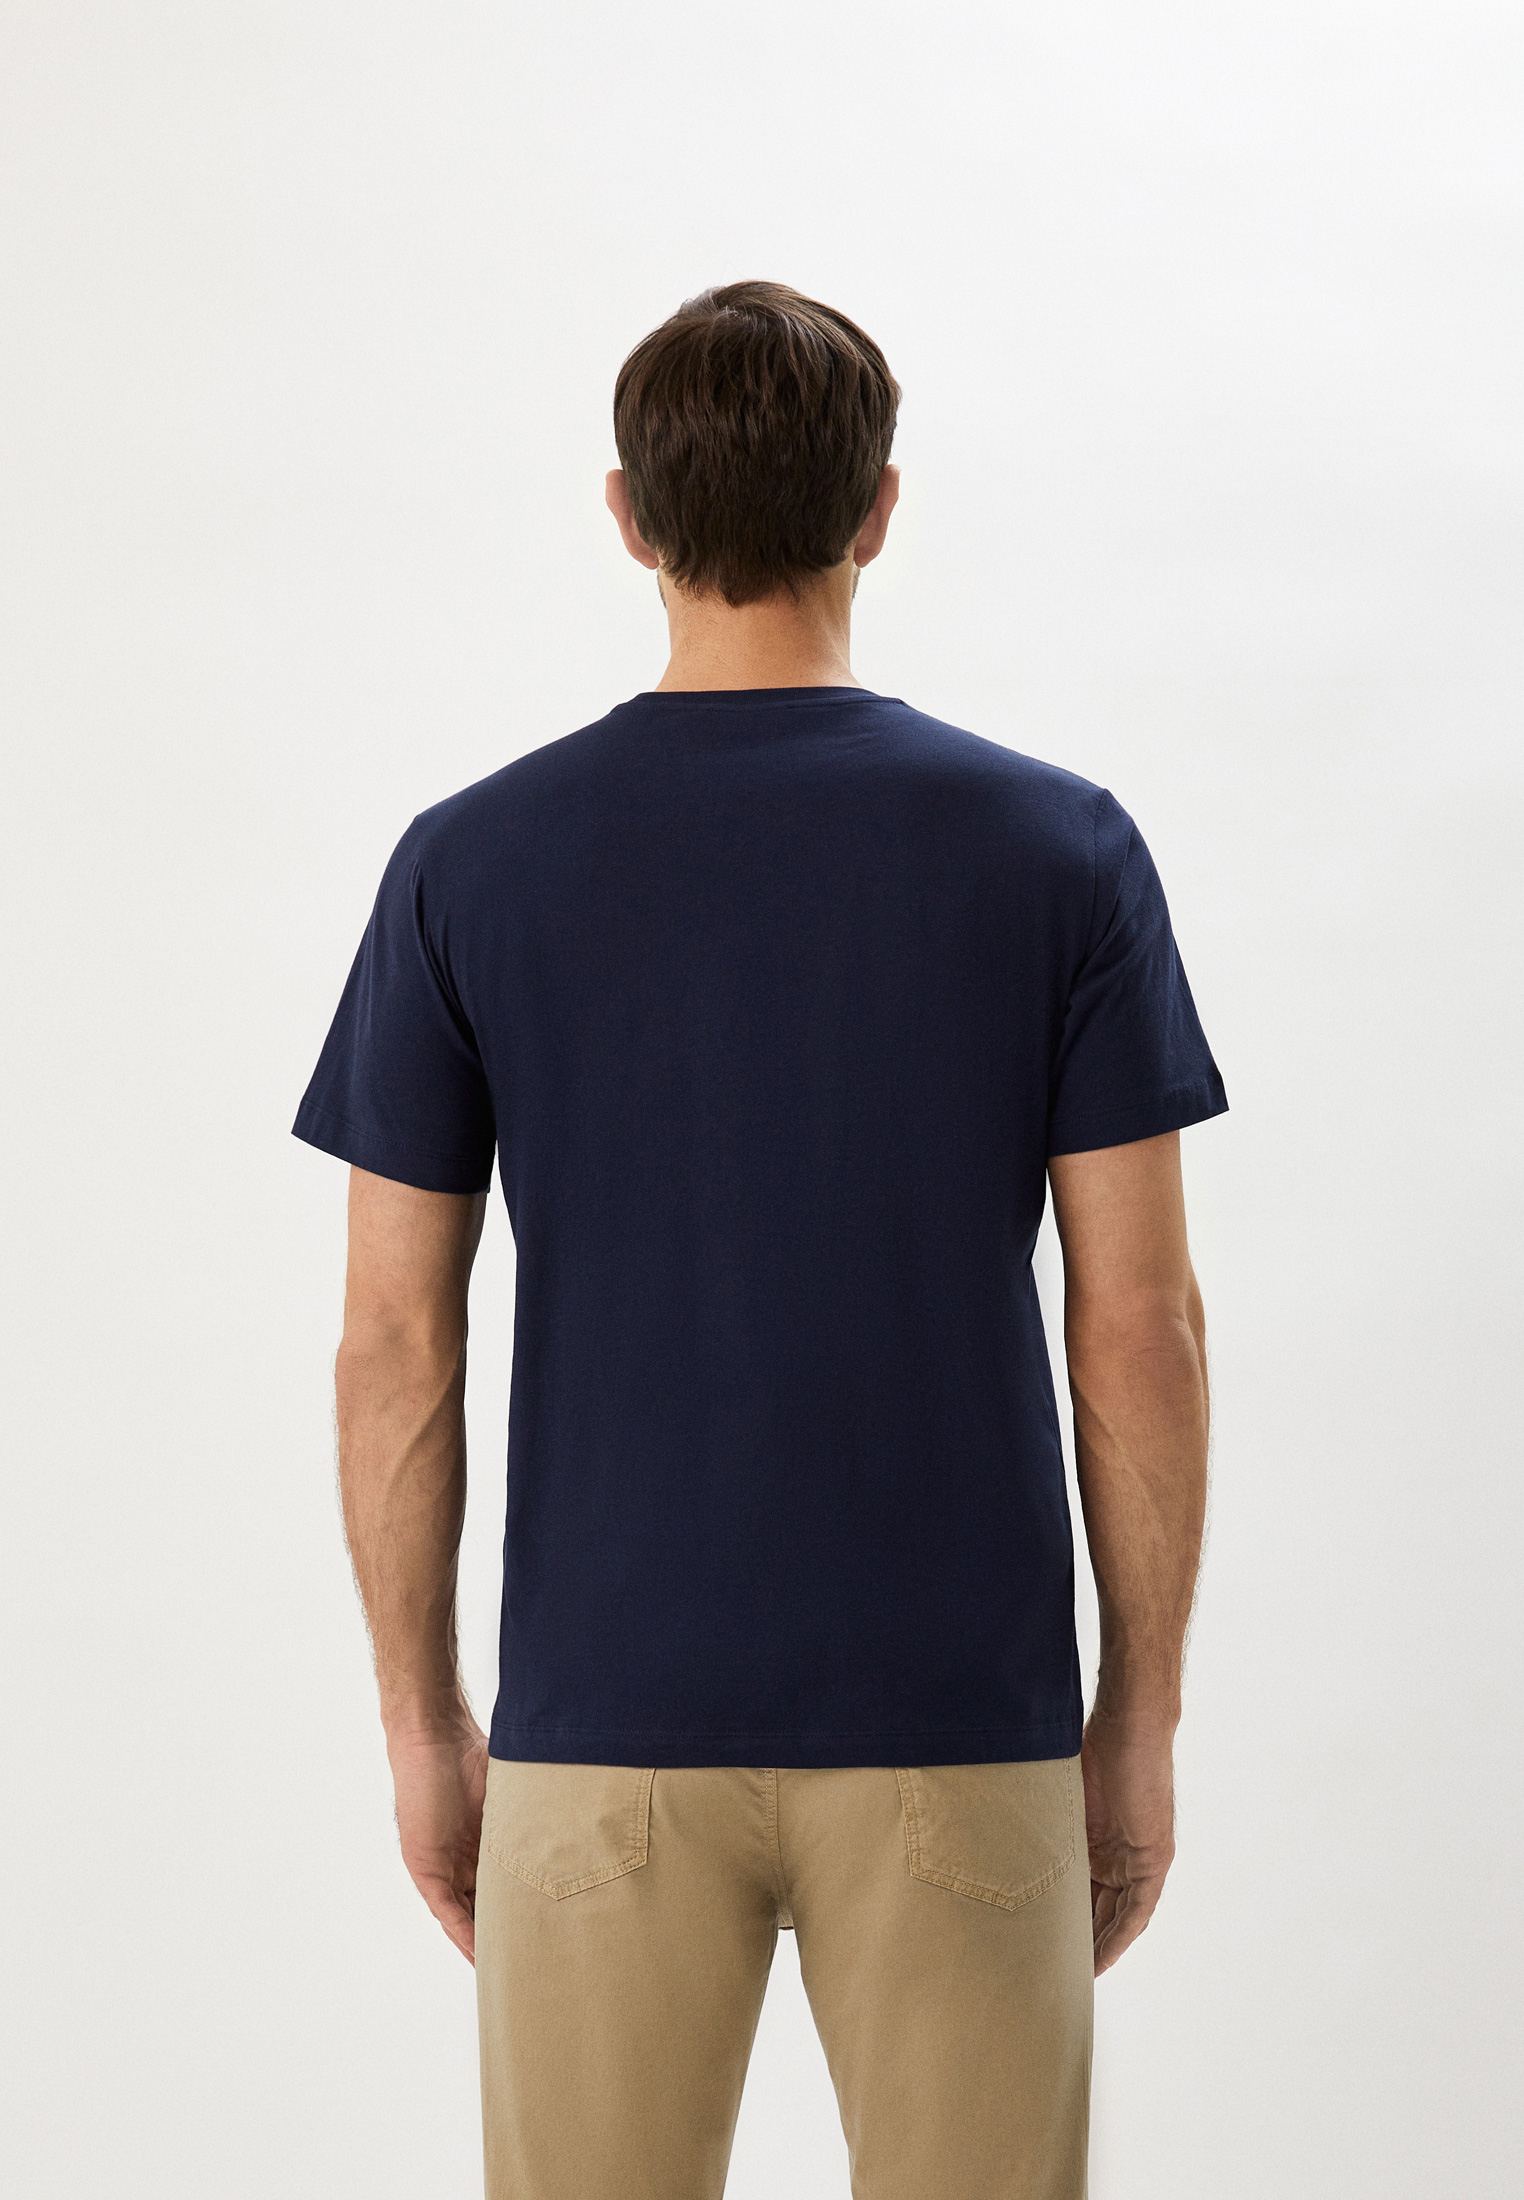 Мужская футболка Trussardi (Труссарди) 52T00619-1T005381: изображение 3